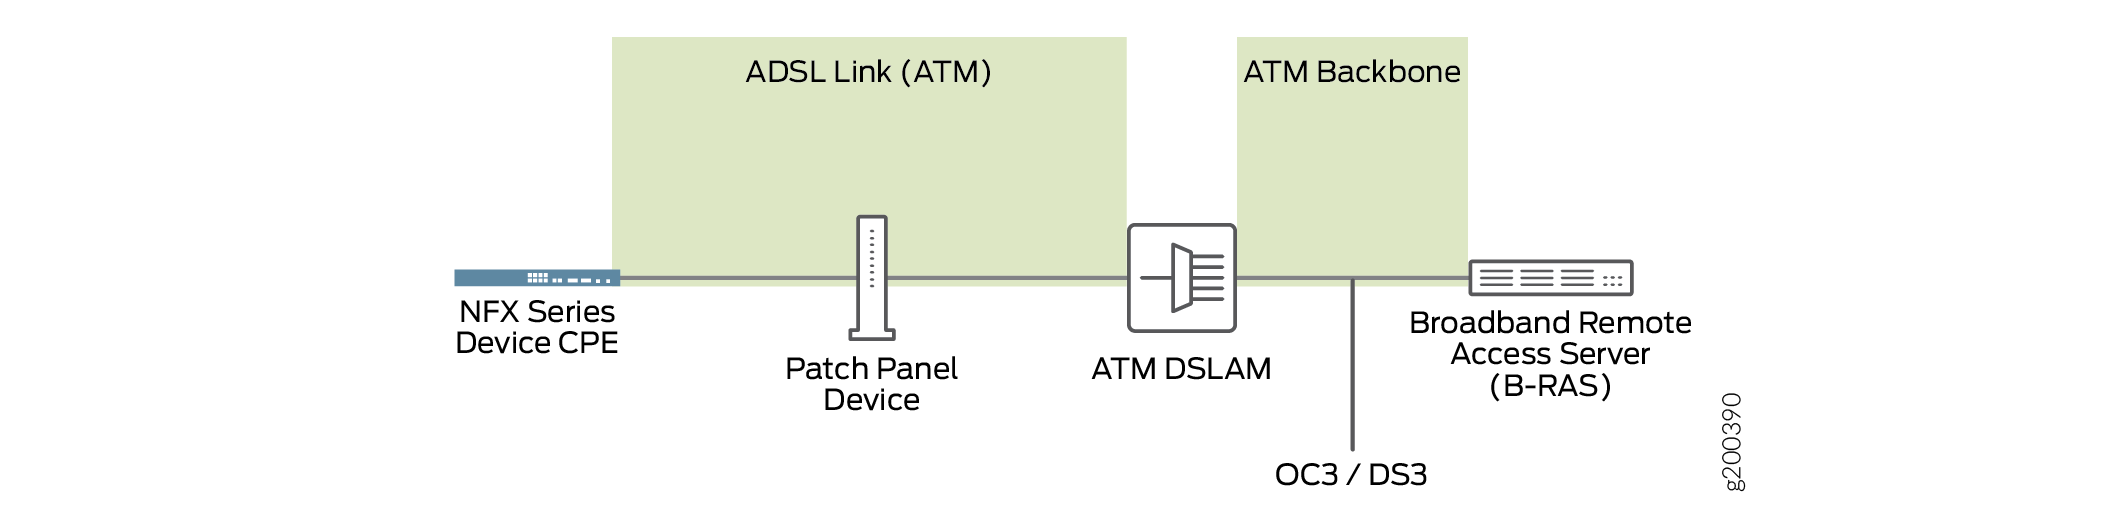 Backward-Compatible ADSL Topology (ATM DSLAM)